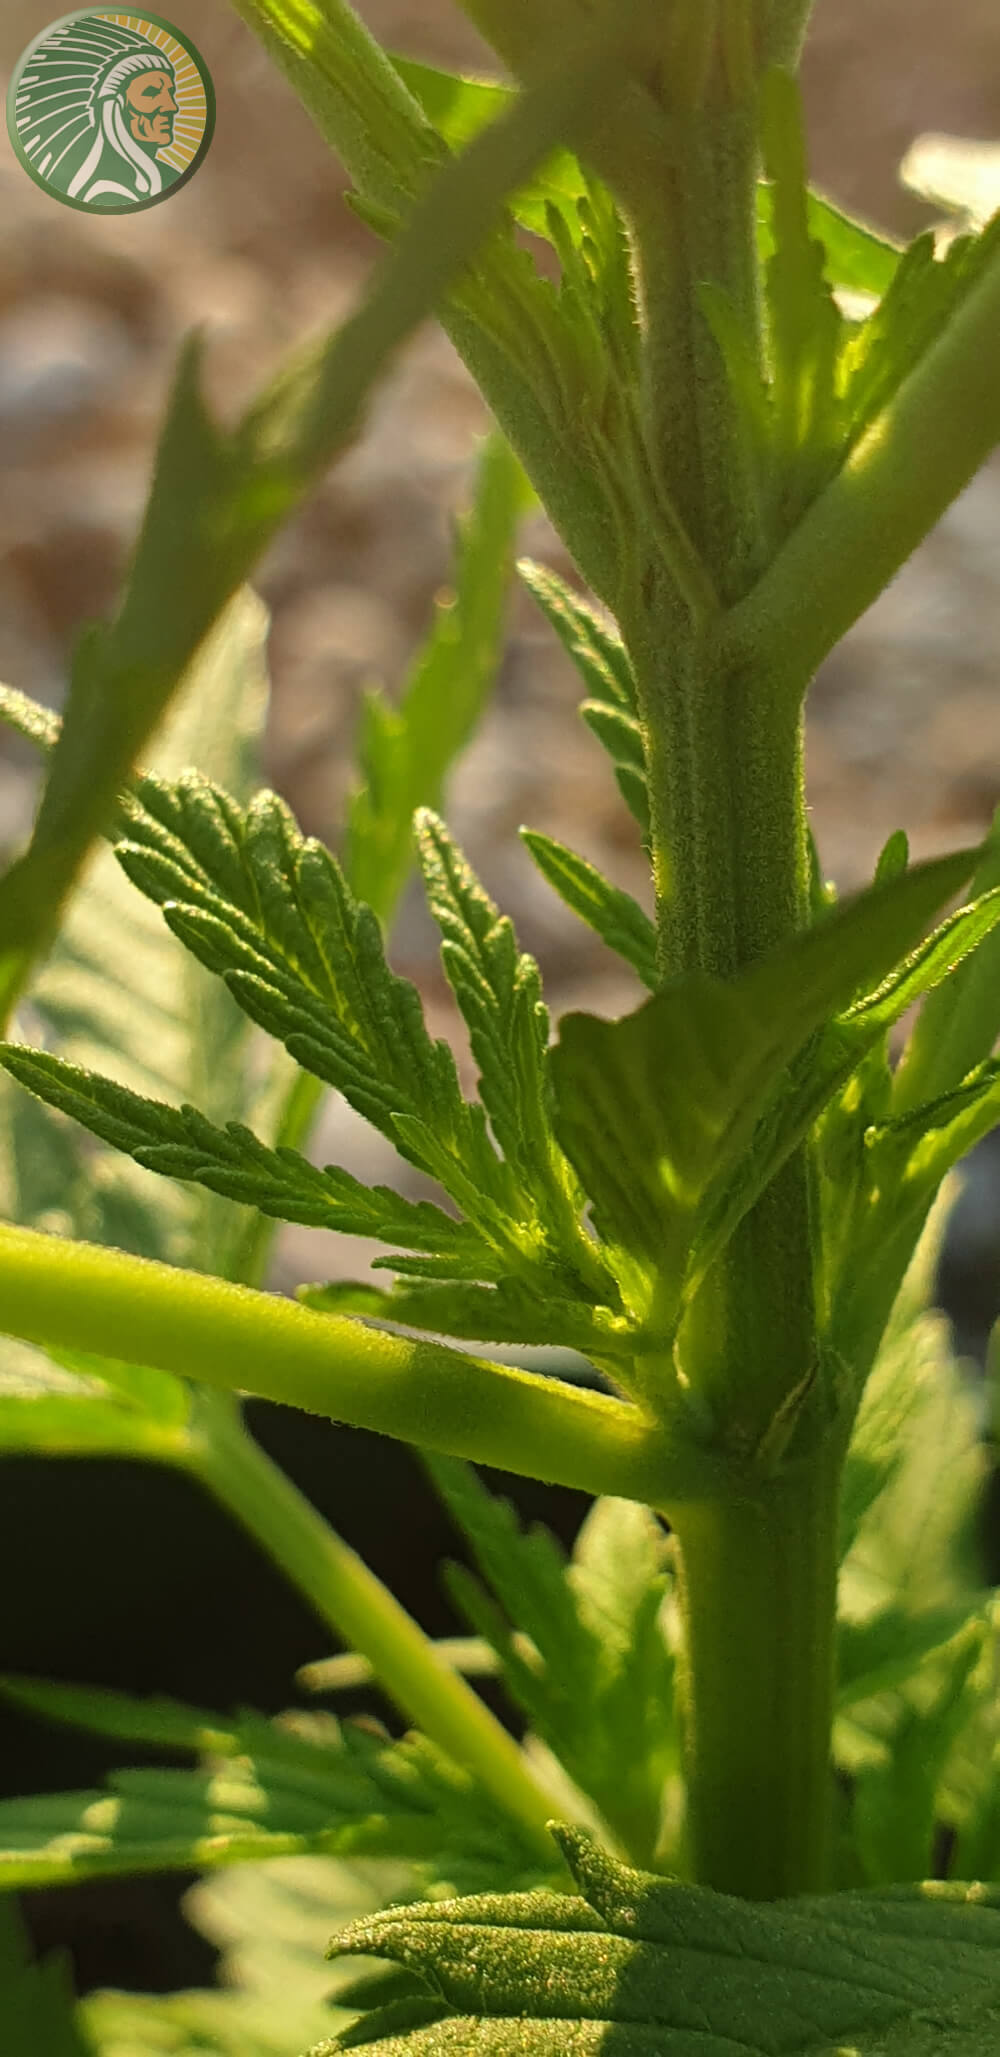 Plante de cannabis saine en pleine forme